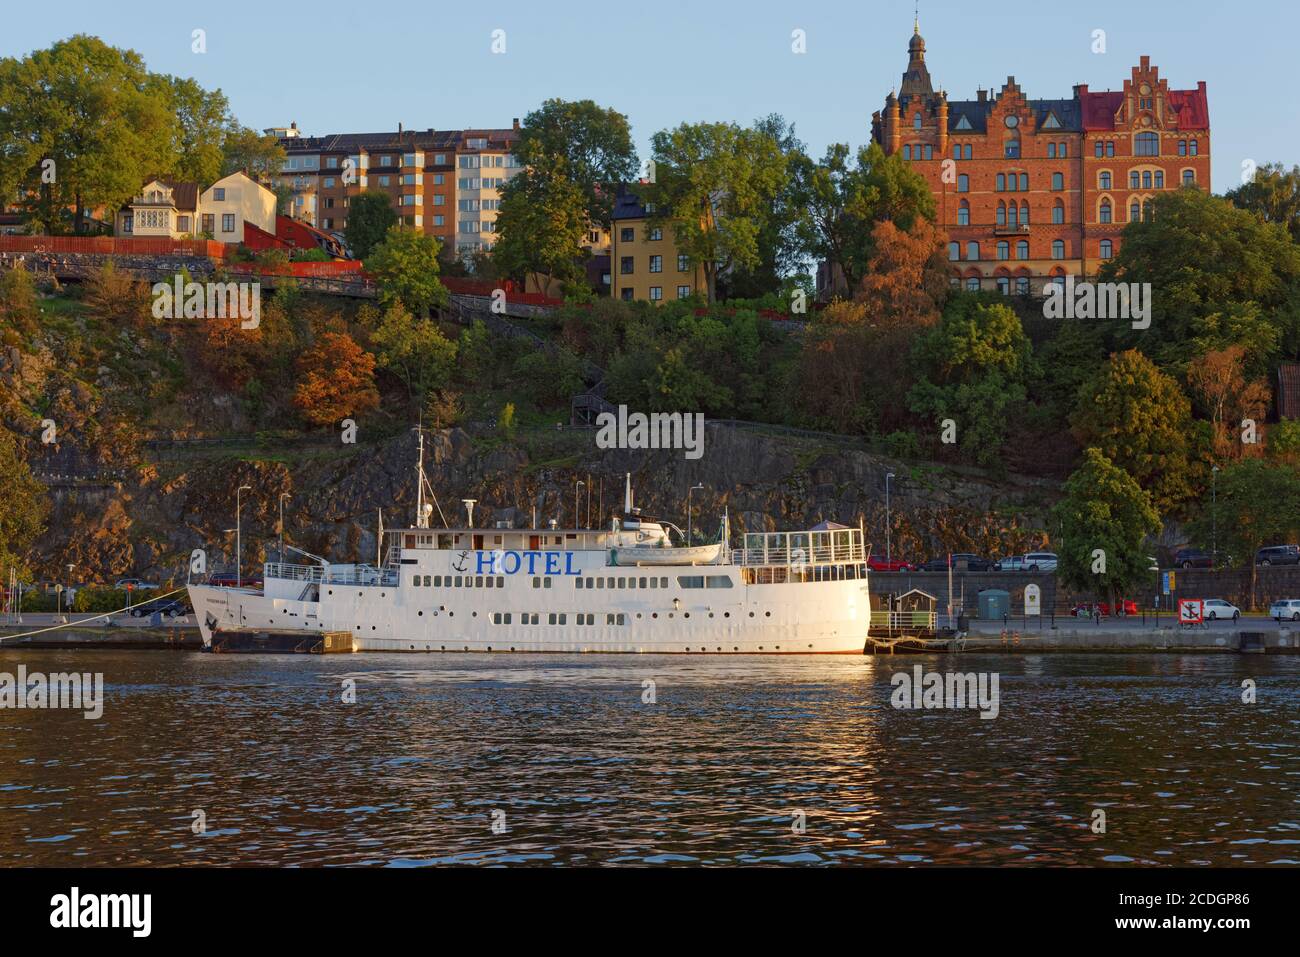 Hotel ship at Sodermalm island in Stockholm, Sweden Stock Photo